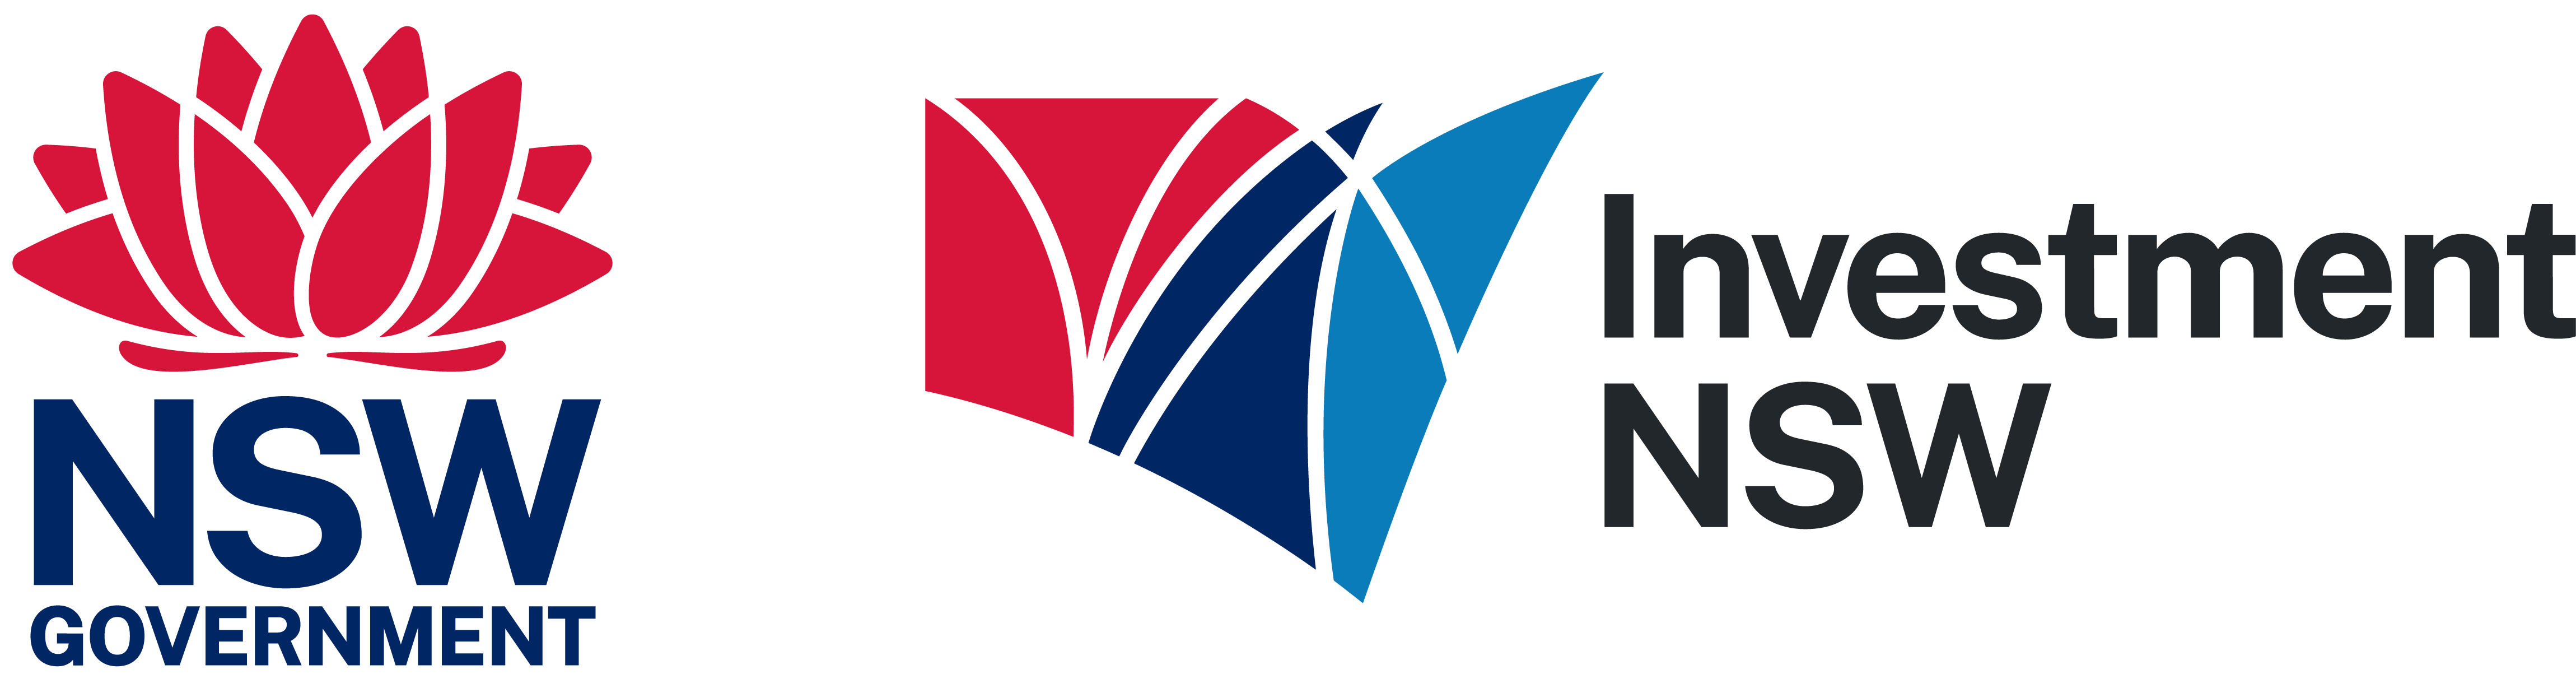 Màu logo Investment NSW